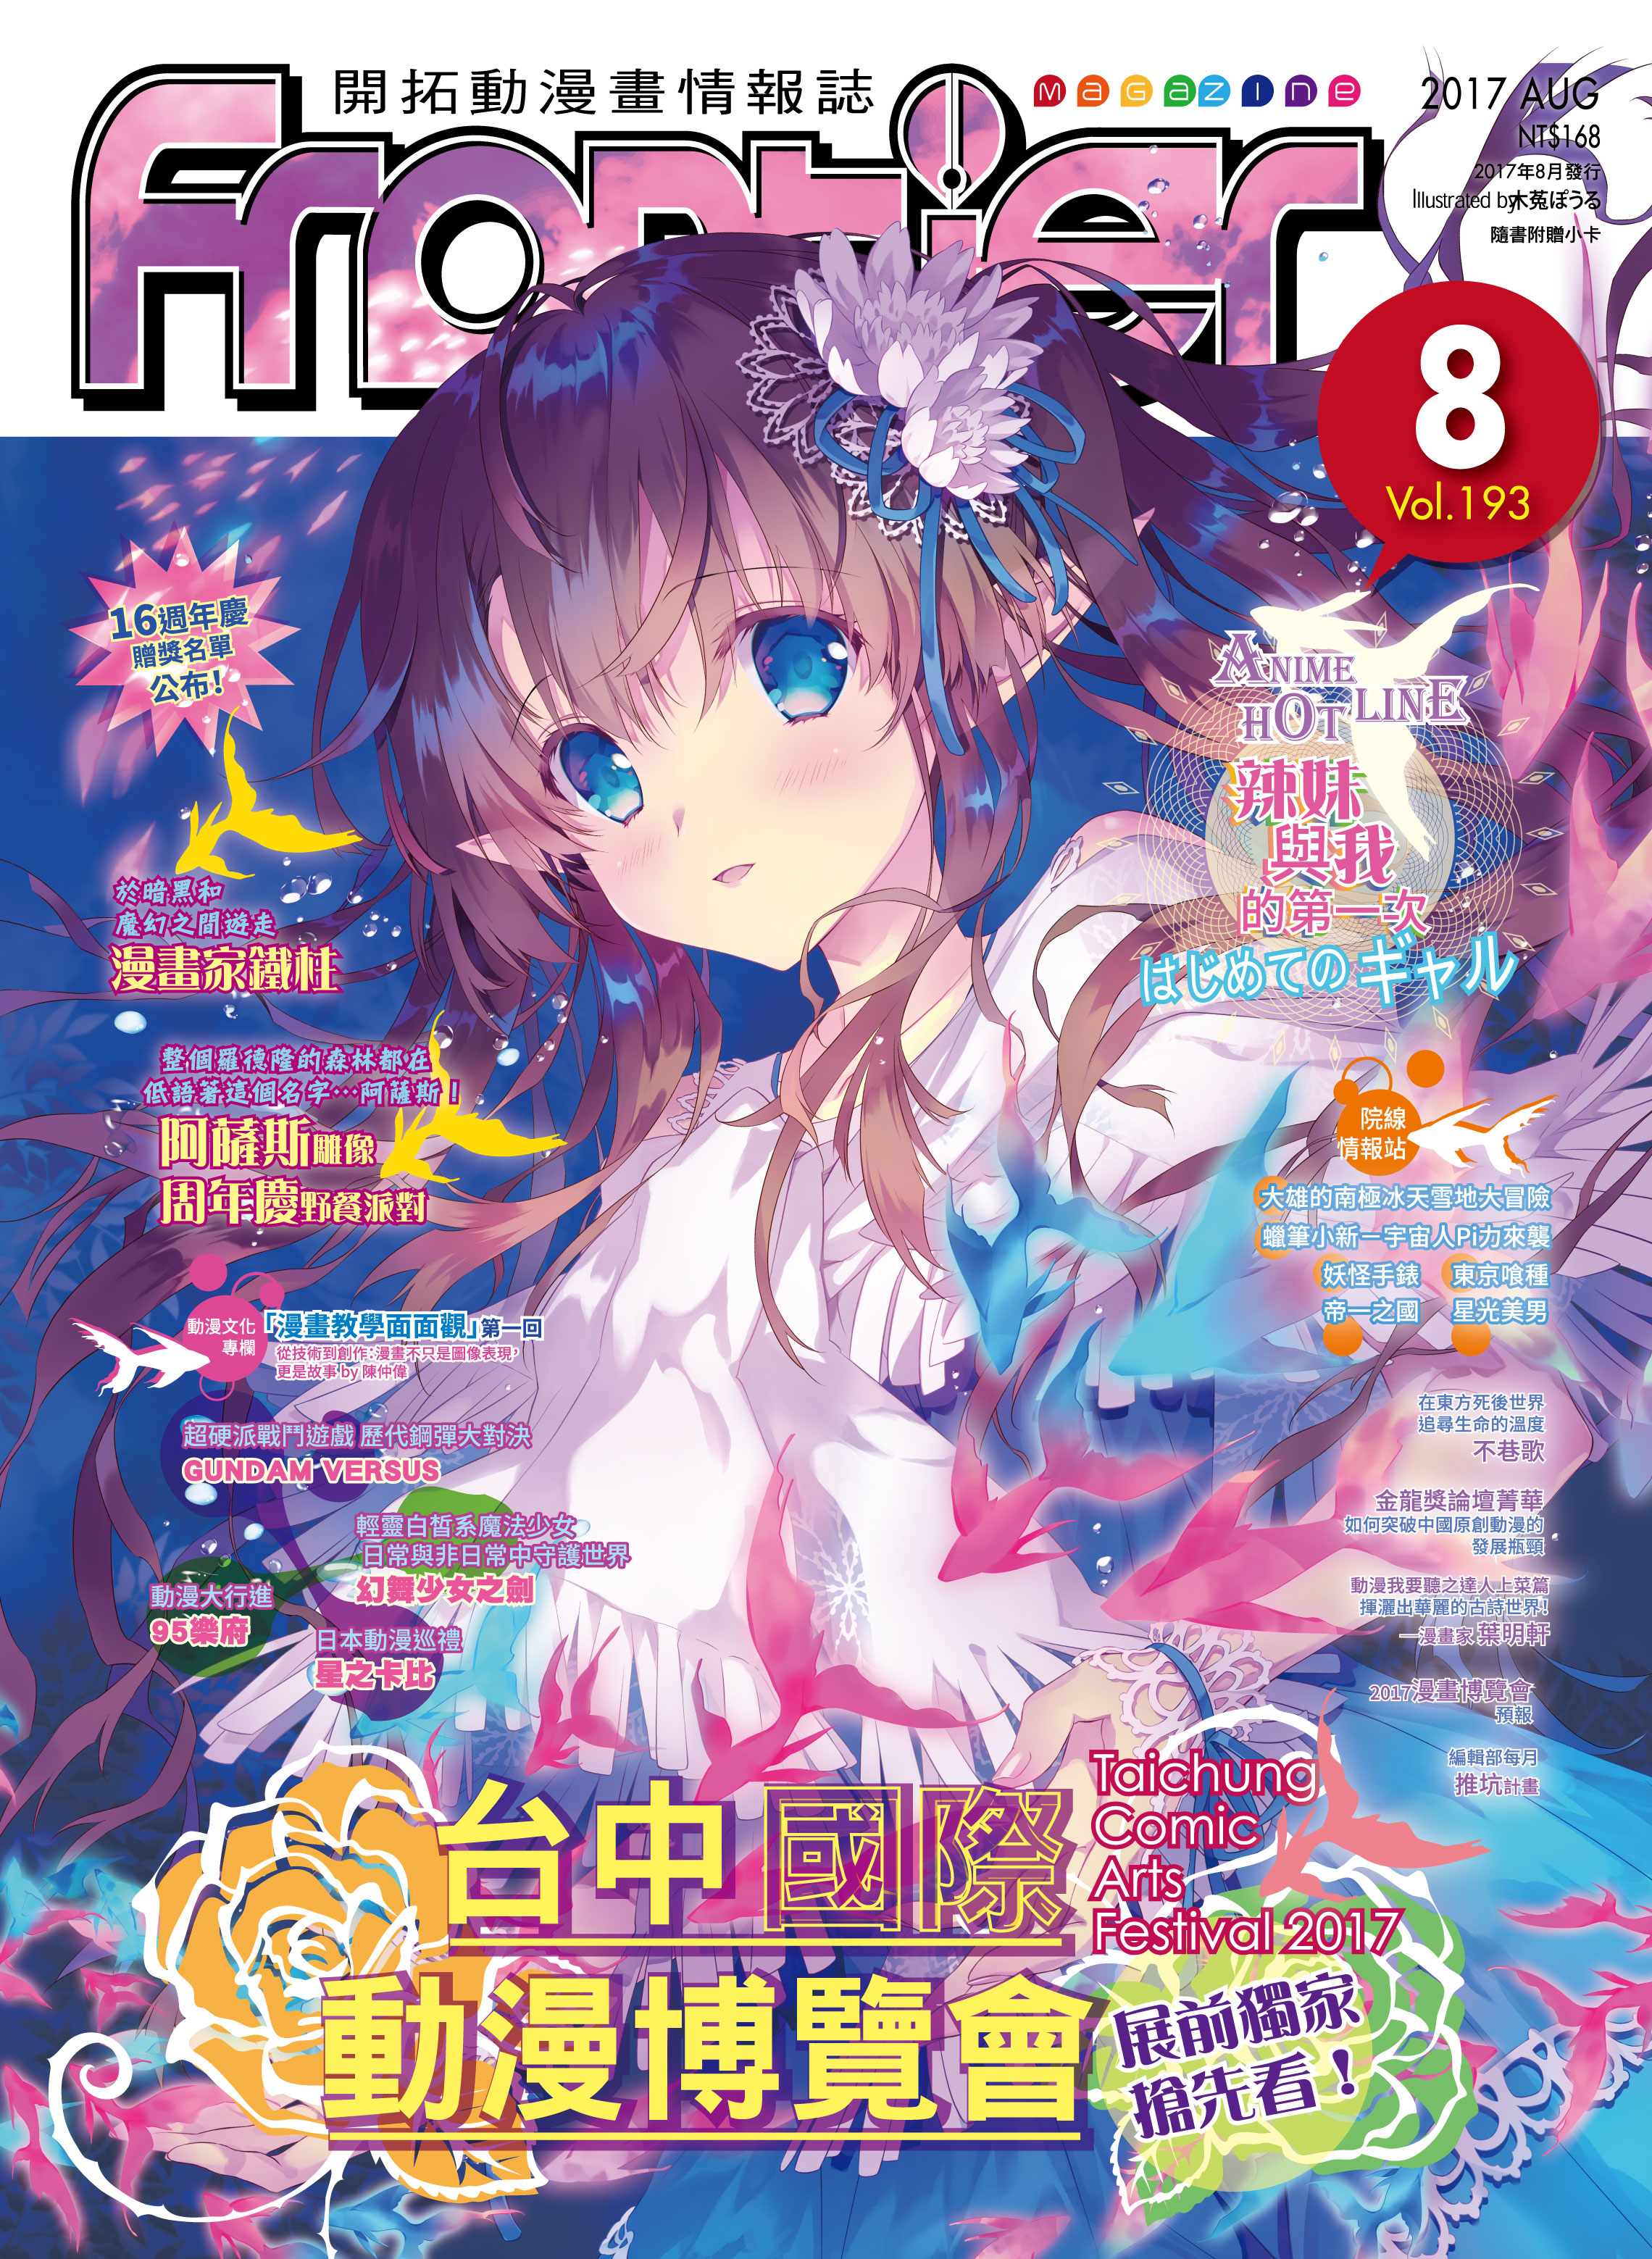 mar2017 magazine cover